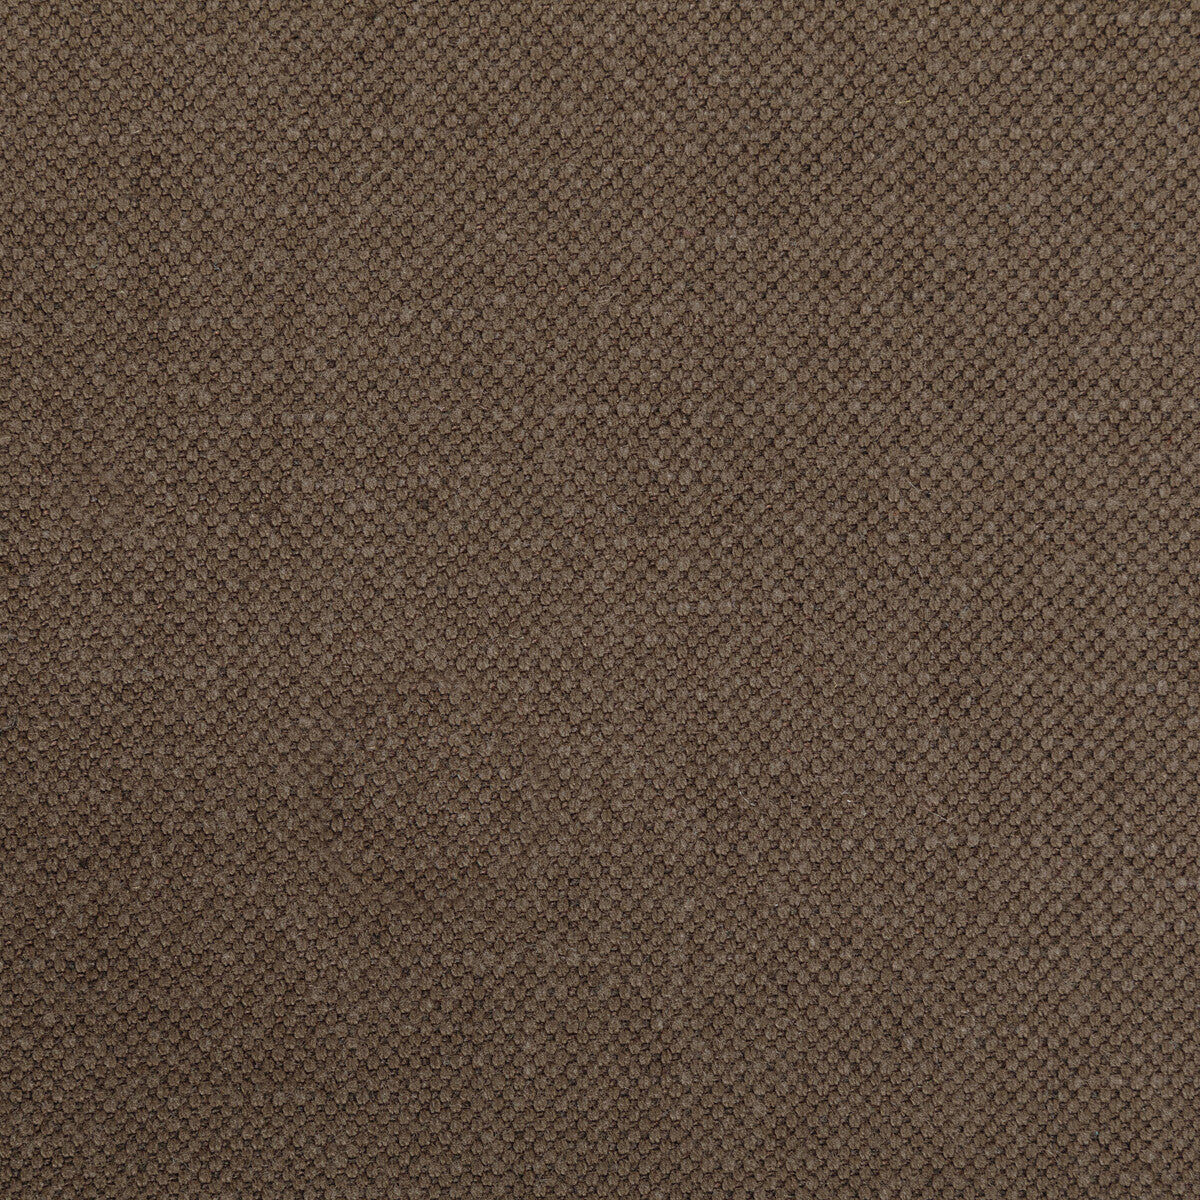 Carson fabric in mocha color - pattern 36282.66.0 - by Kravet Basics